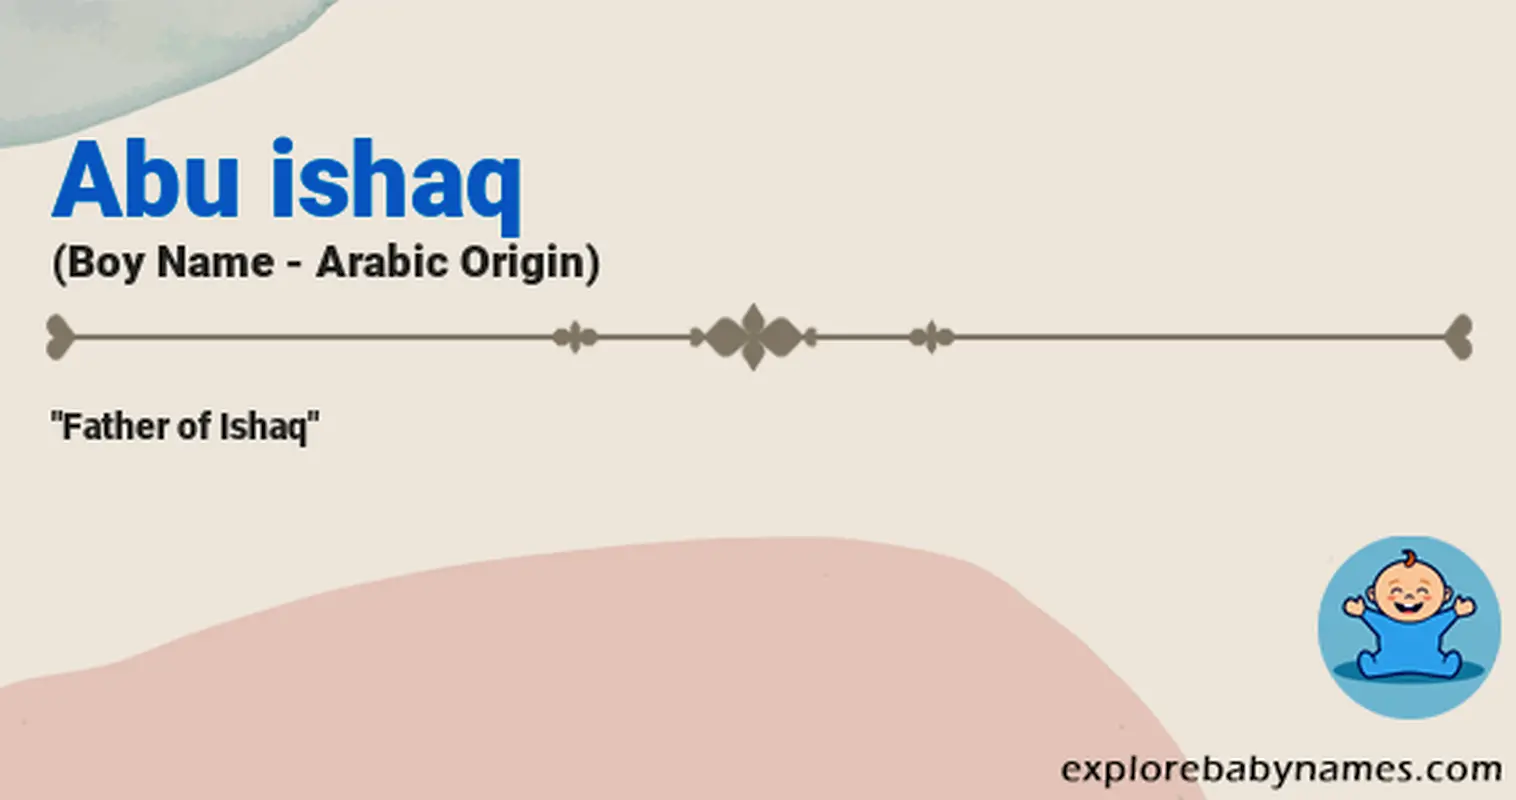 Meaning of Abu ishaq